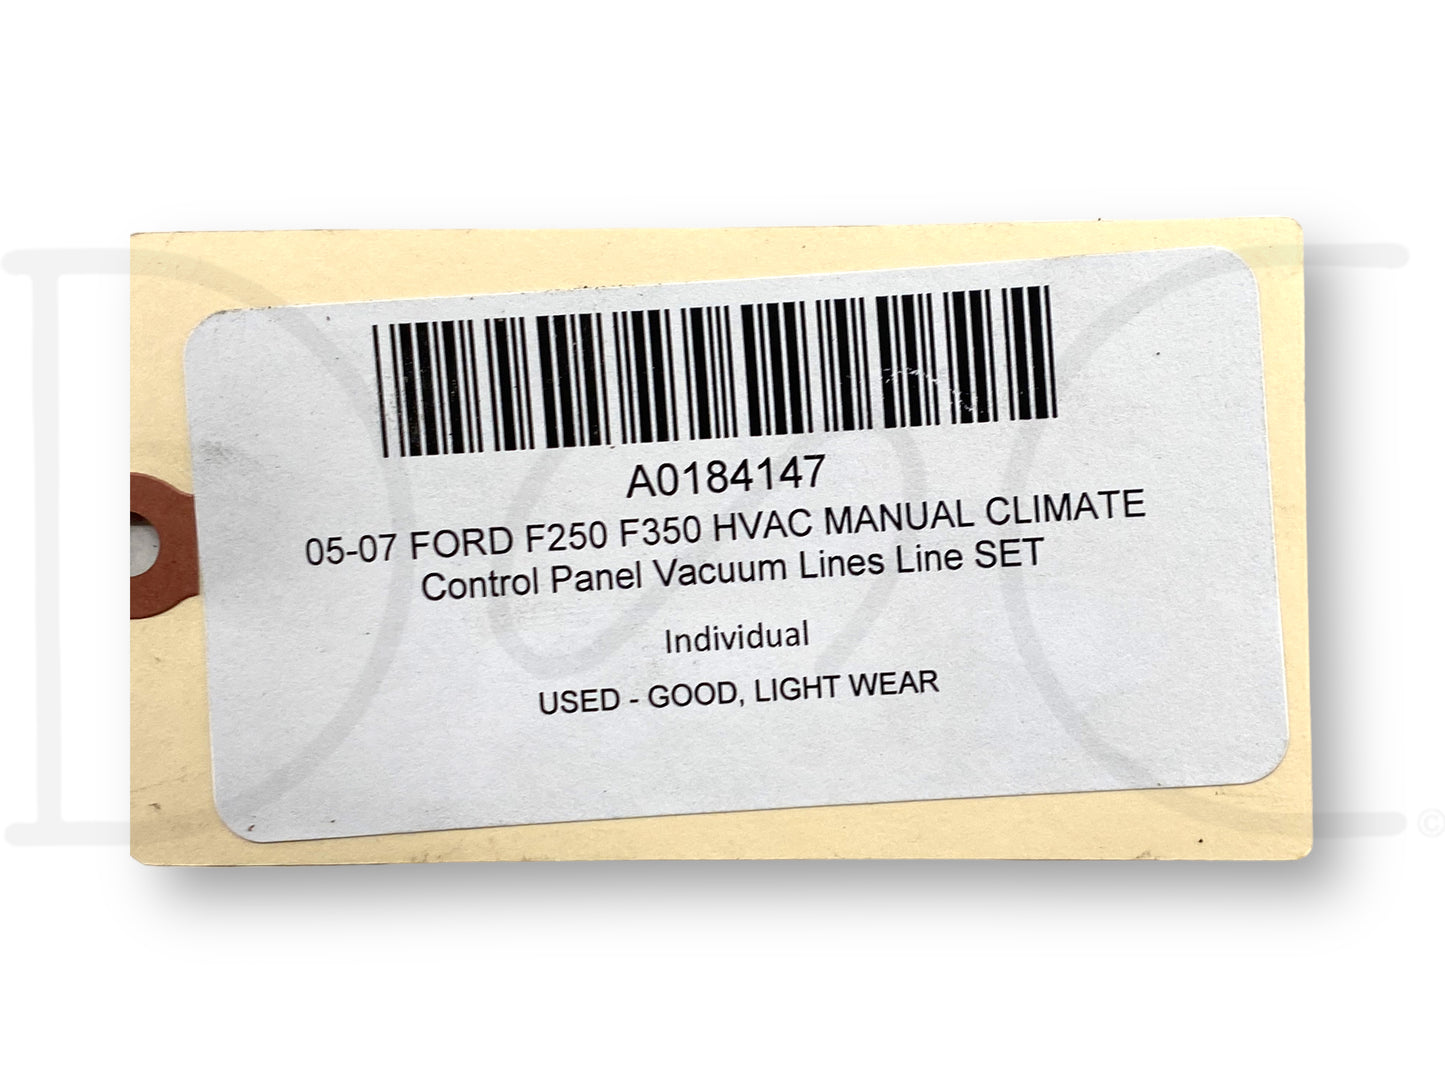 05-07 Ford F250 F350 HVAC Manual Climate Control Panel Vacuum Lines Line Set